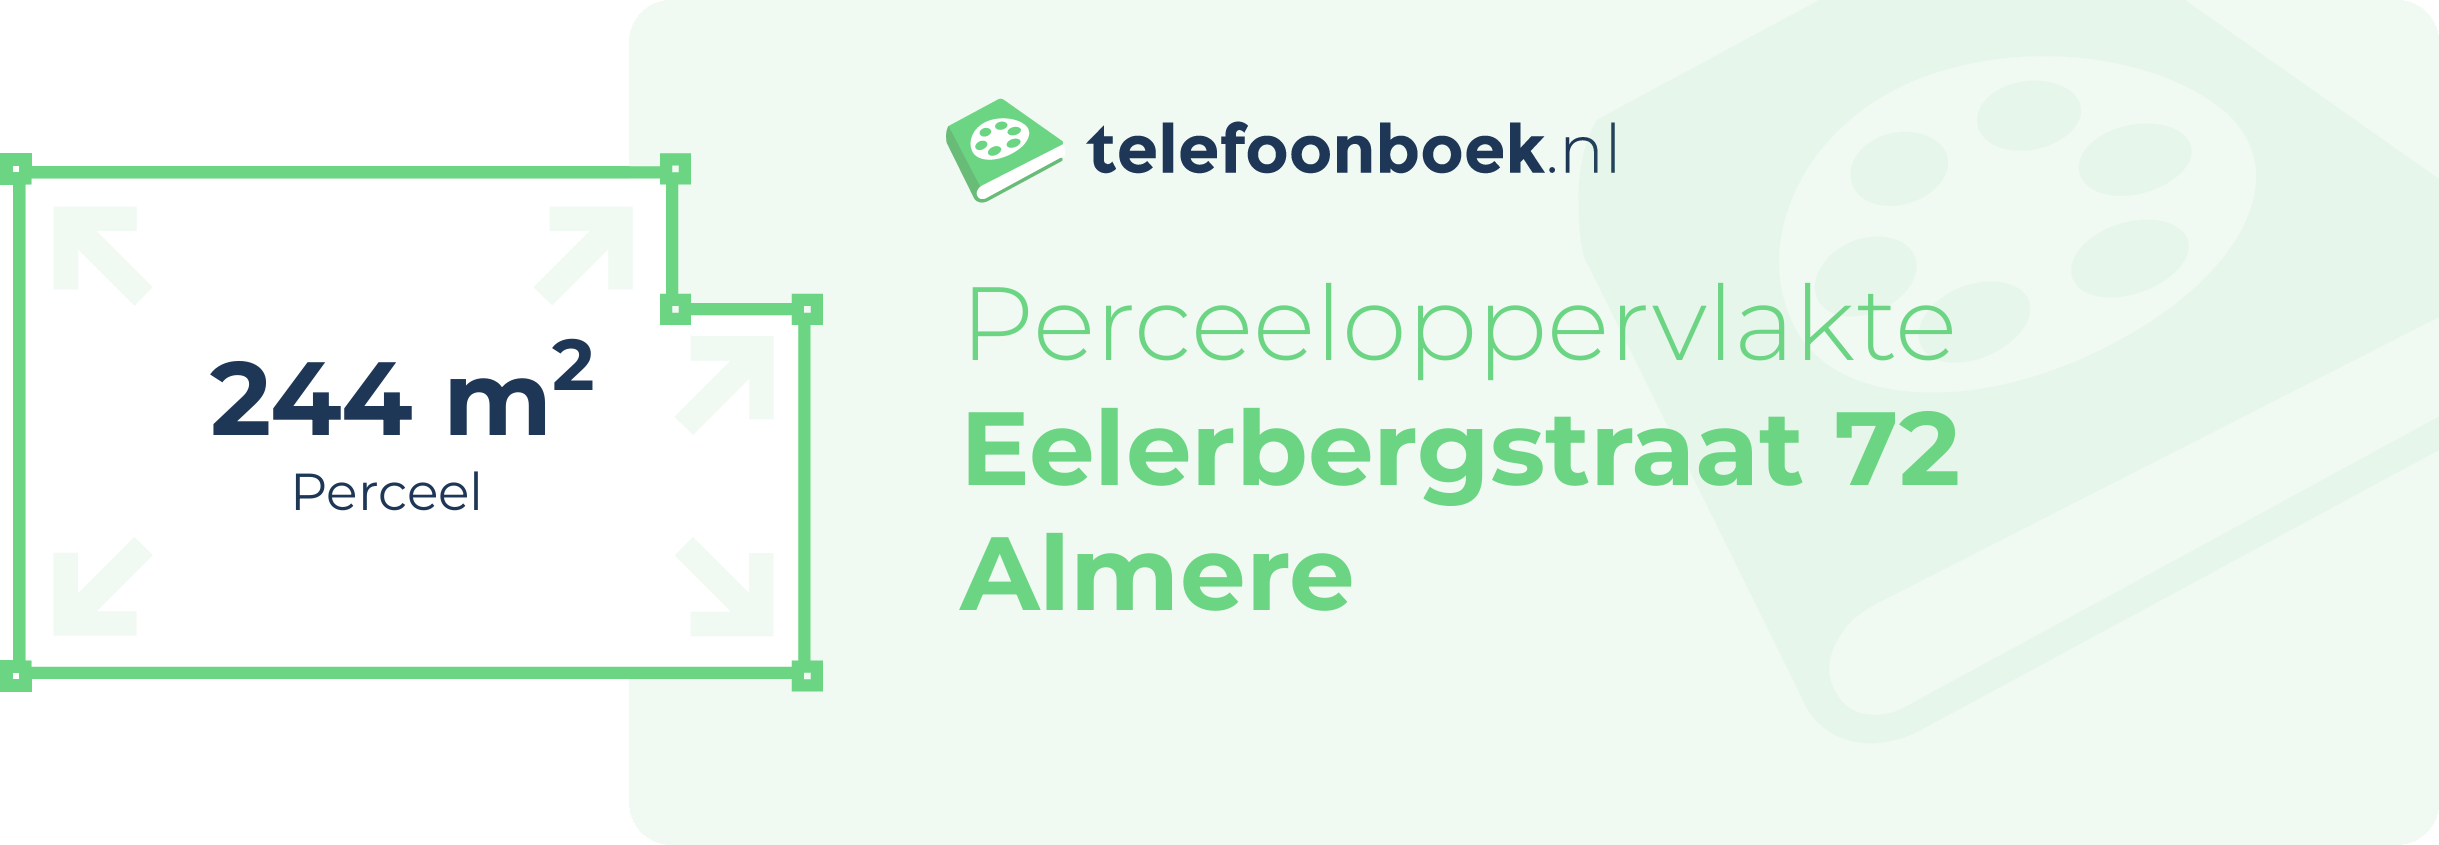 Perceeloppervlakte Eelerbergstraat 72 Almere